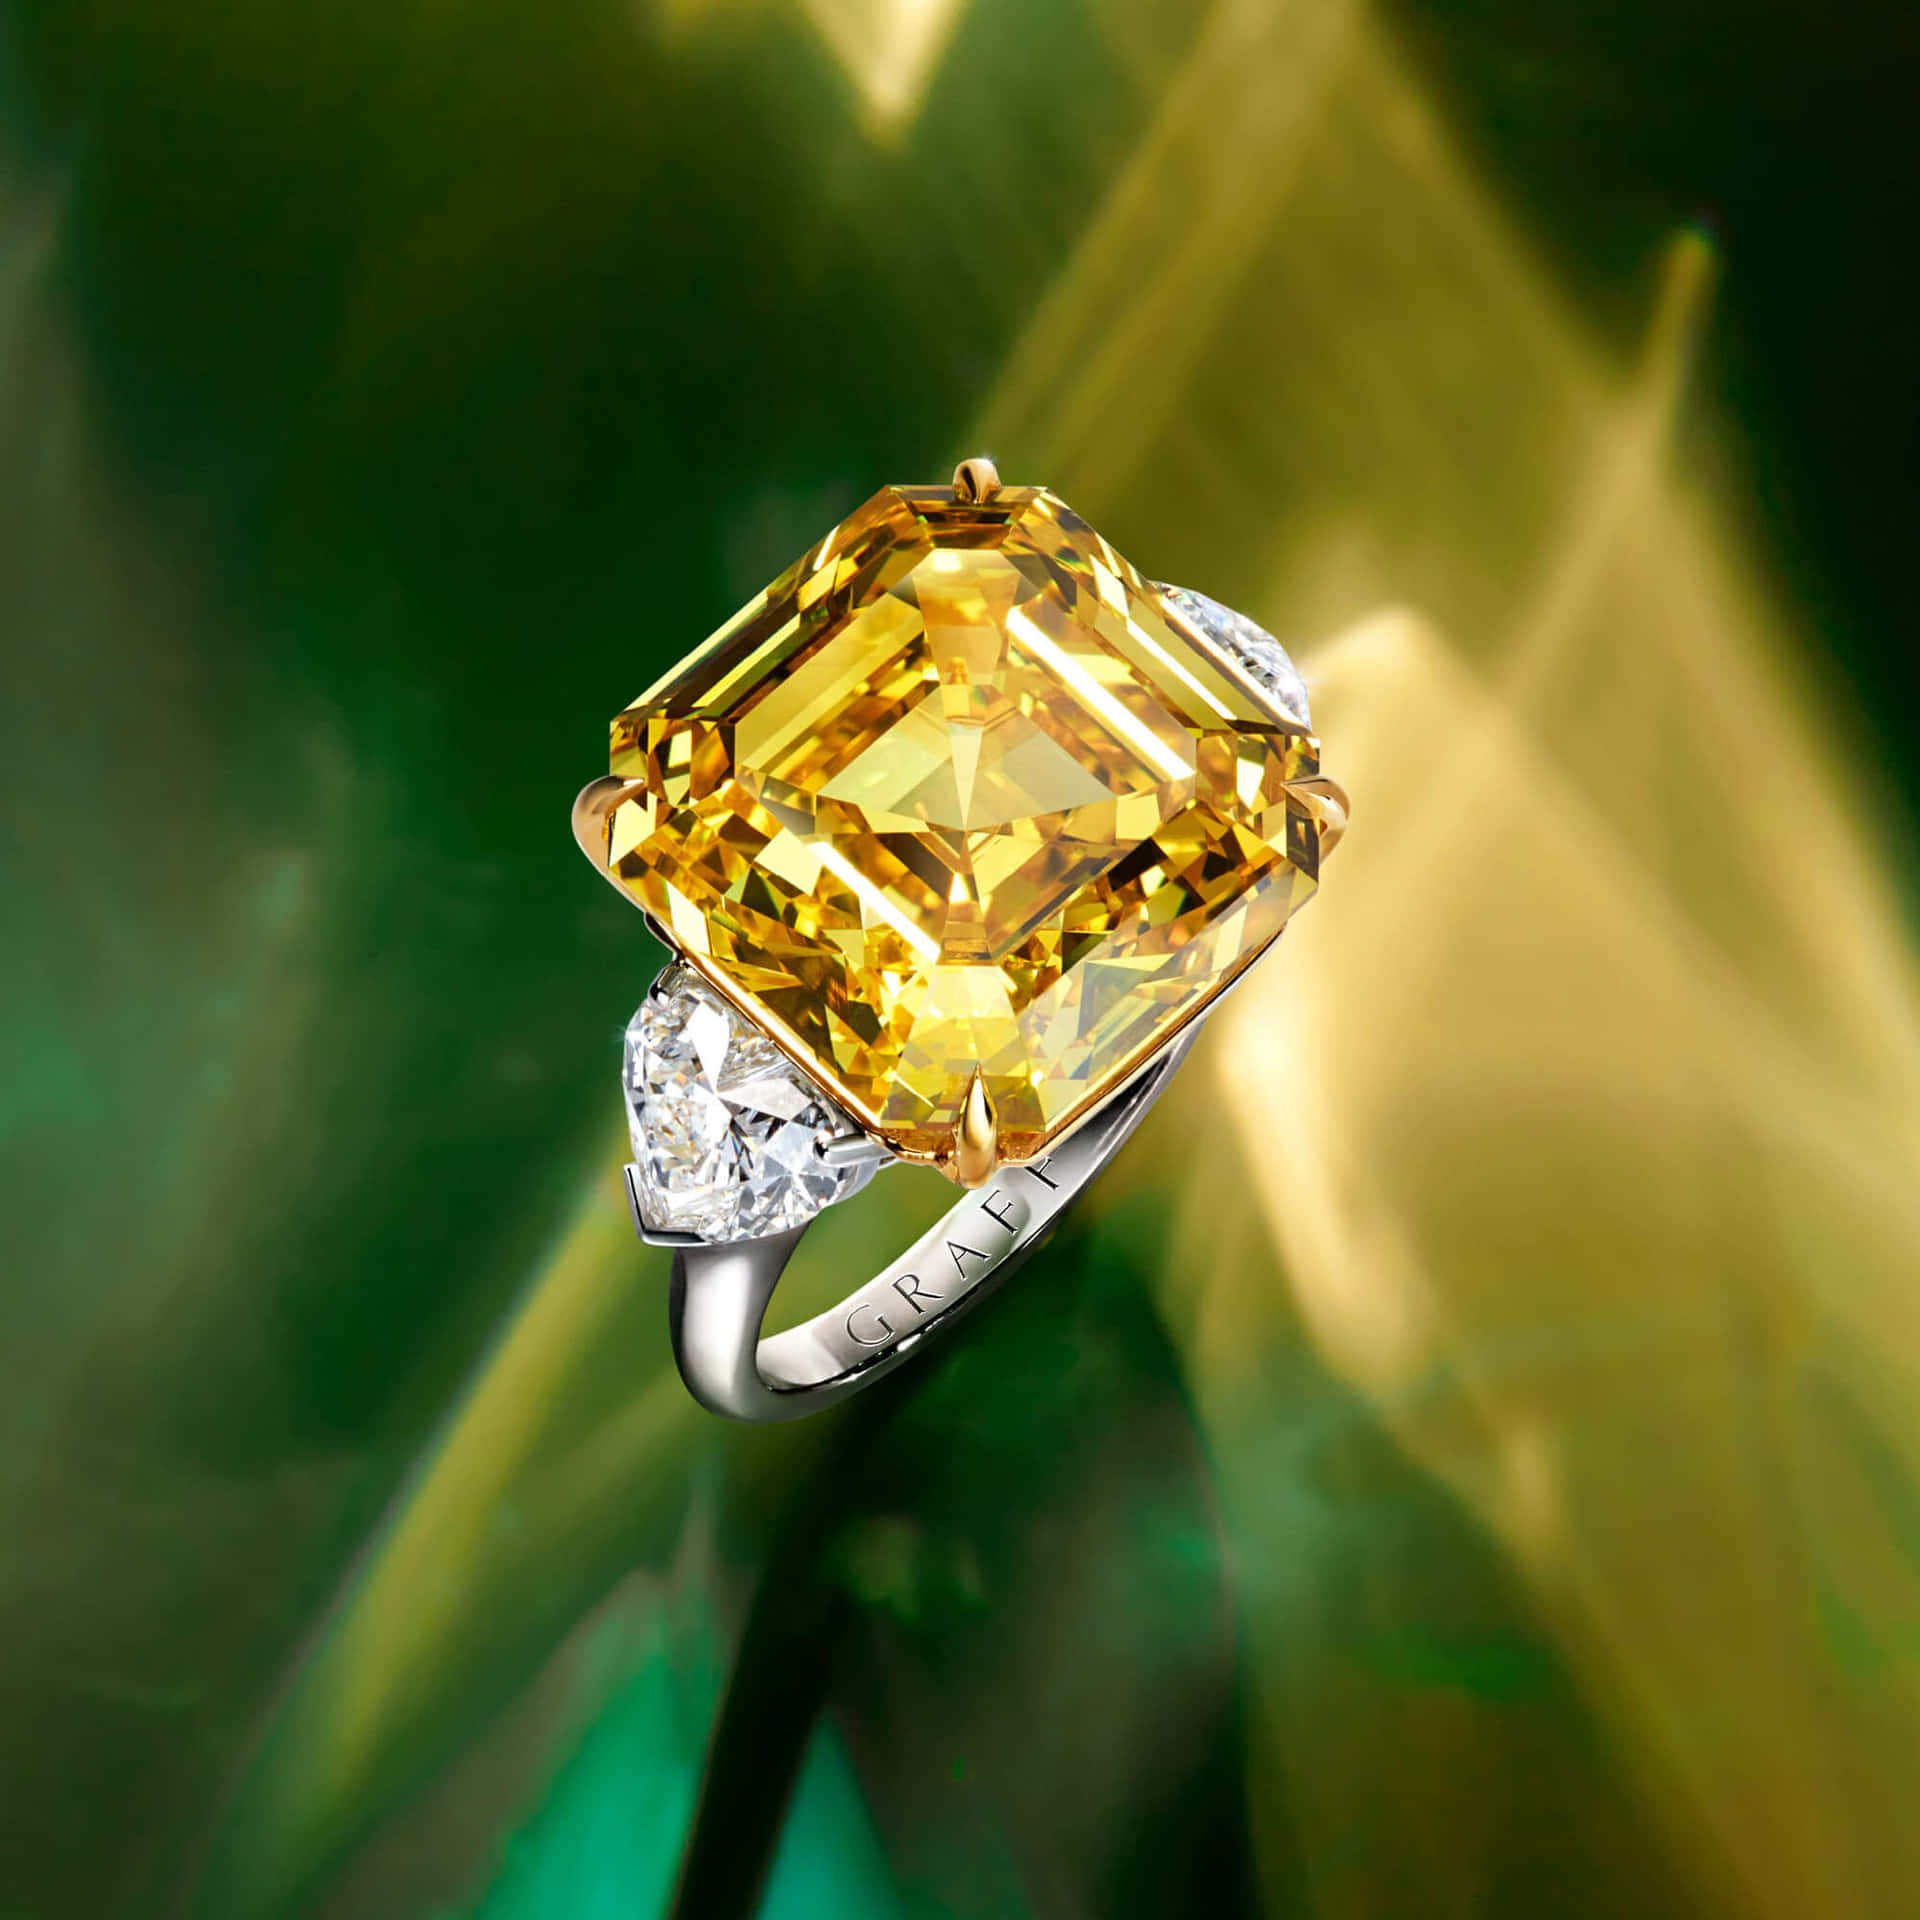 Stunning Yellow Diamond in close-up view Wallpaper